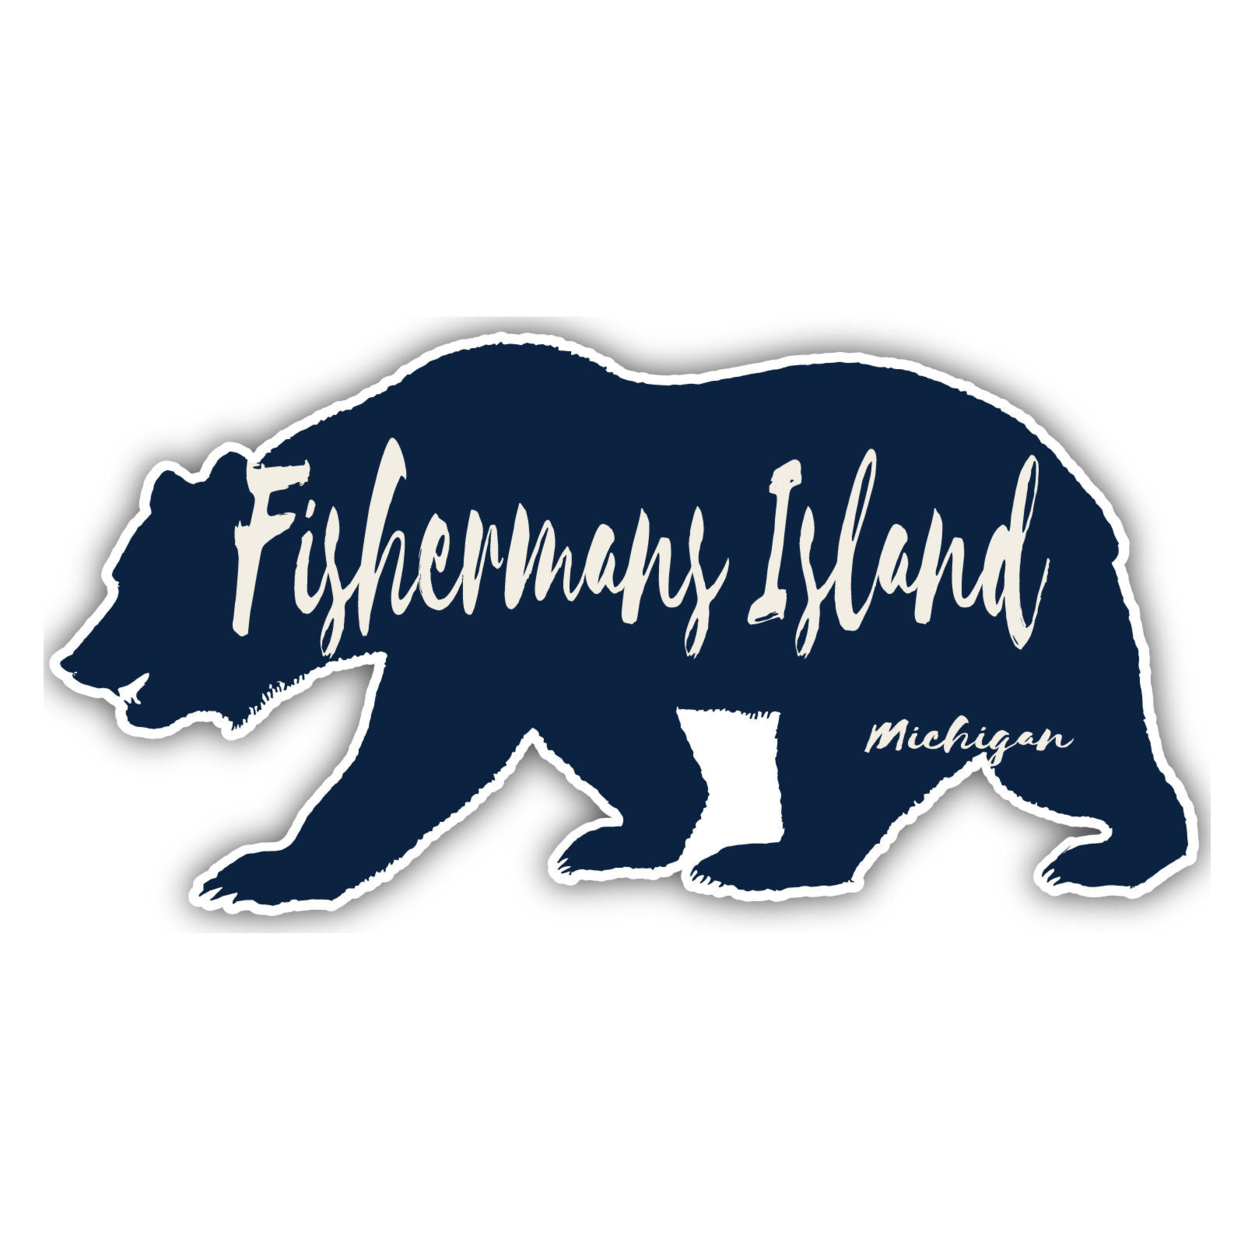 Fishermans Island Michigan Souvenir Decorative Stickers (Choose Theme And Size) - Single Unit, 8-Inch, Bear